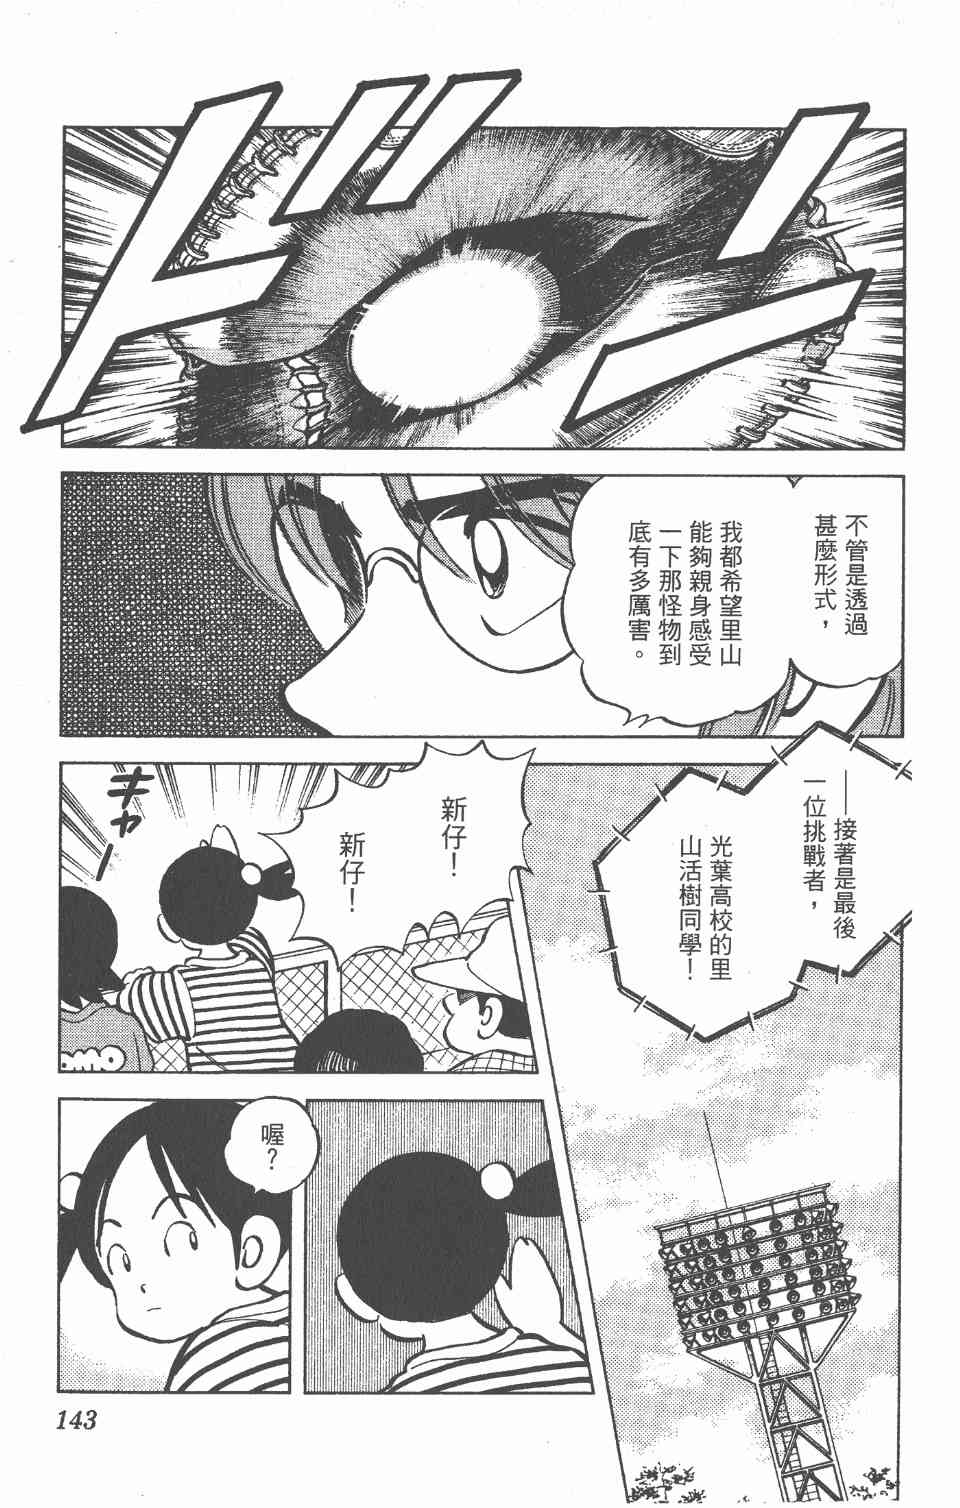 《Katsu!》漫画 青春交叉点09卷